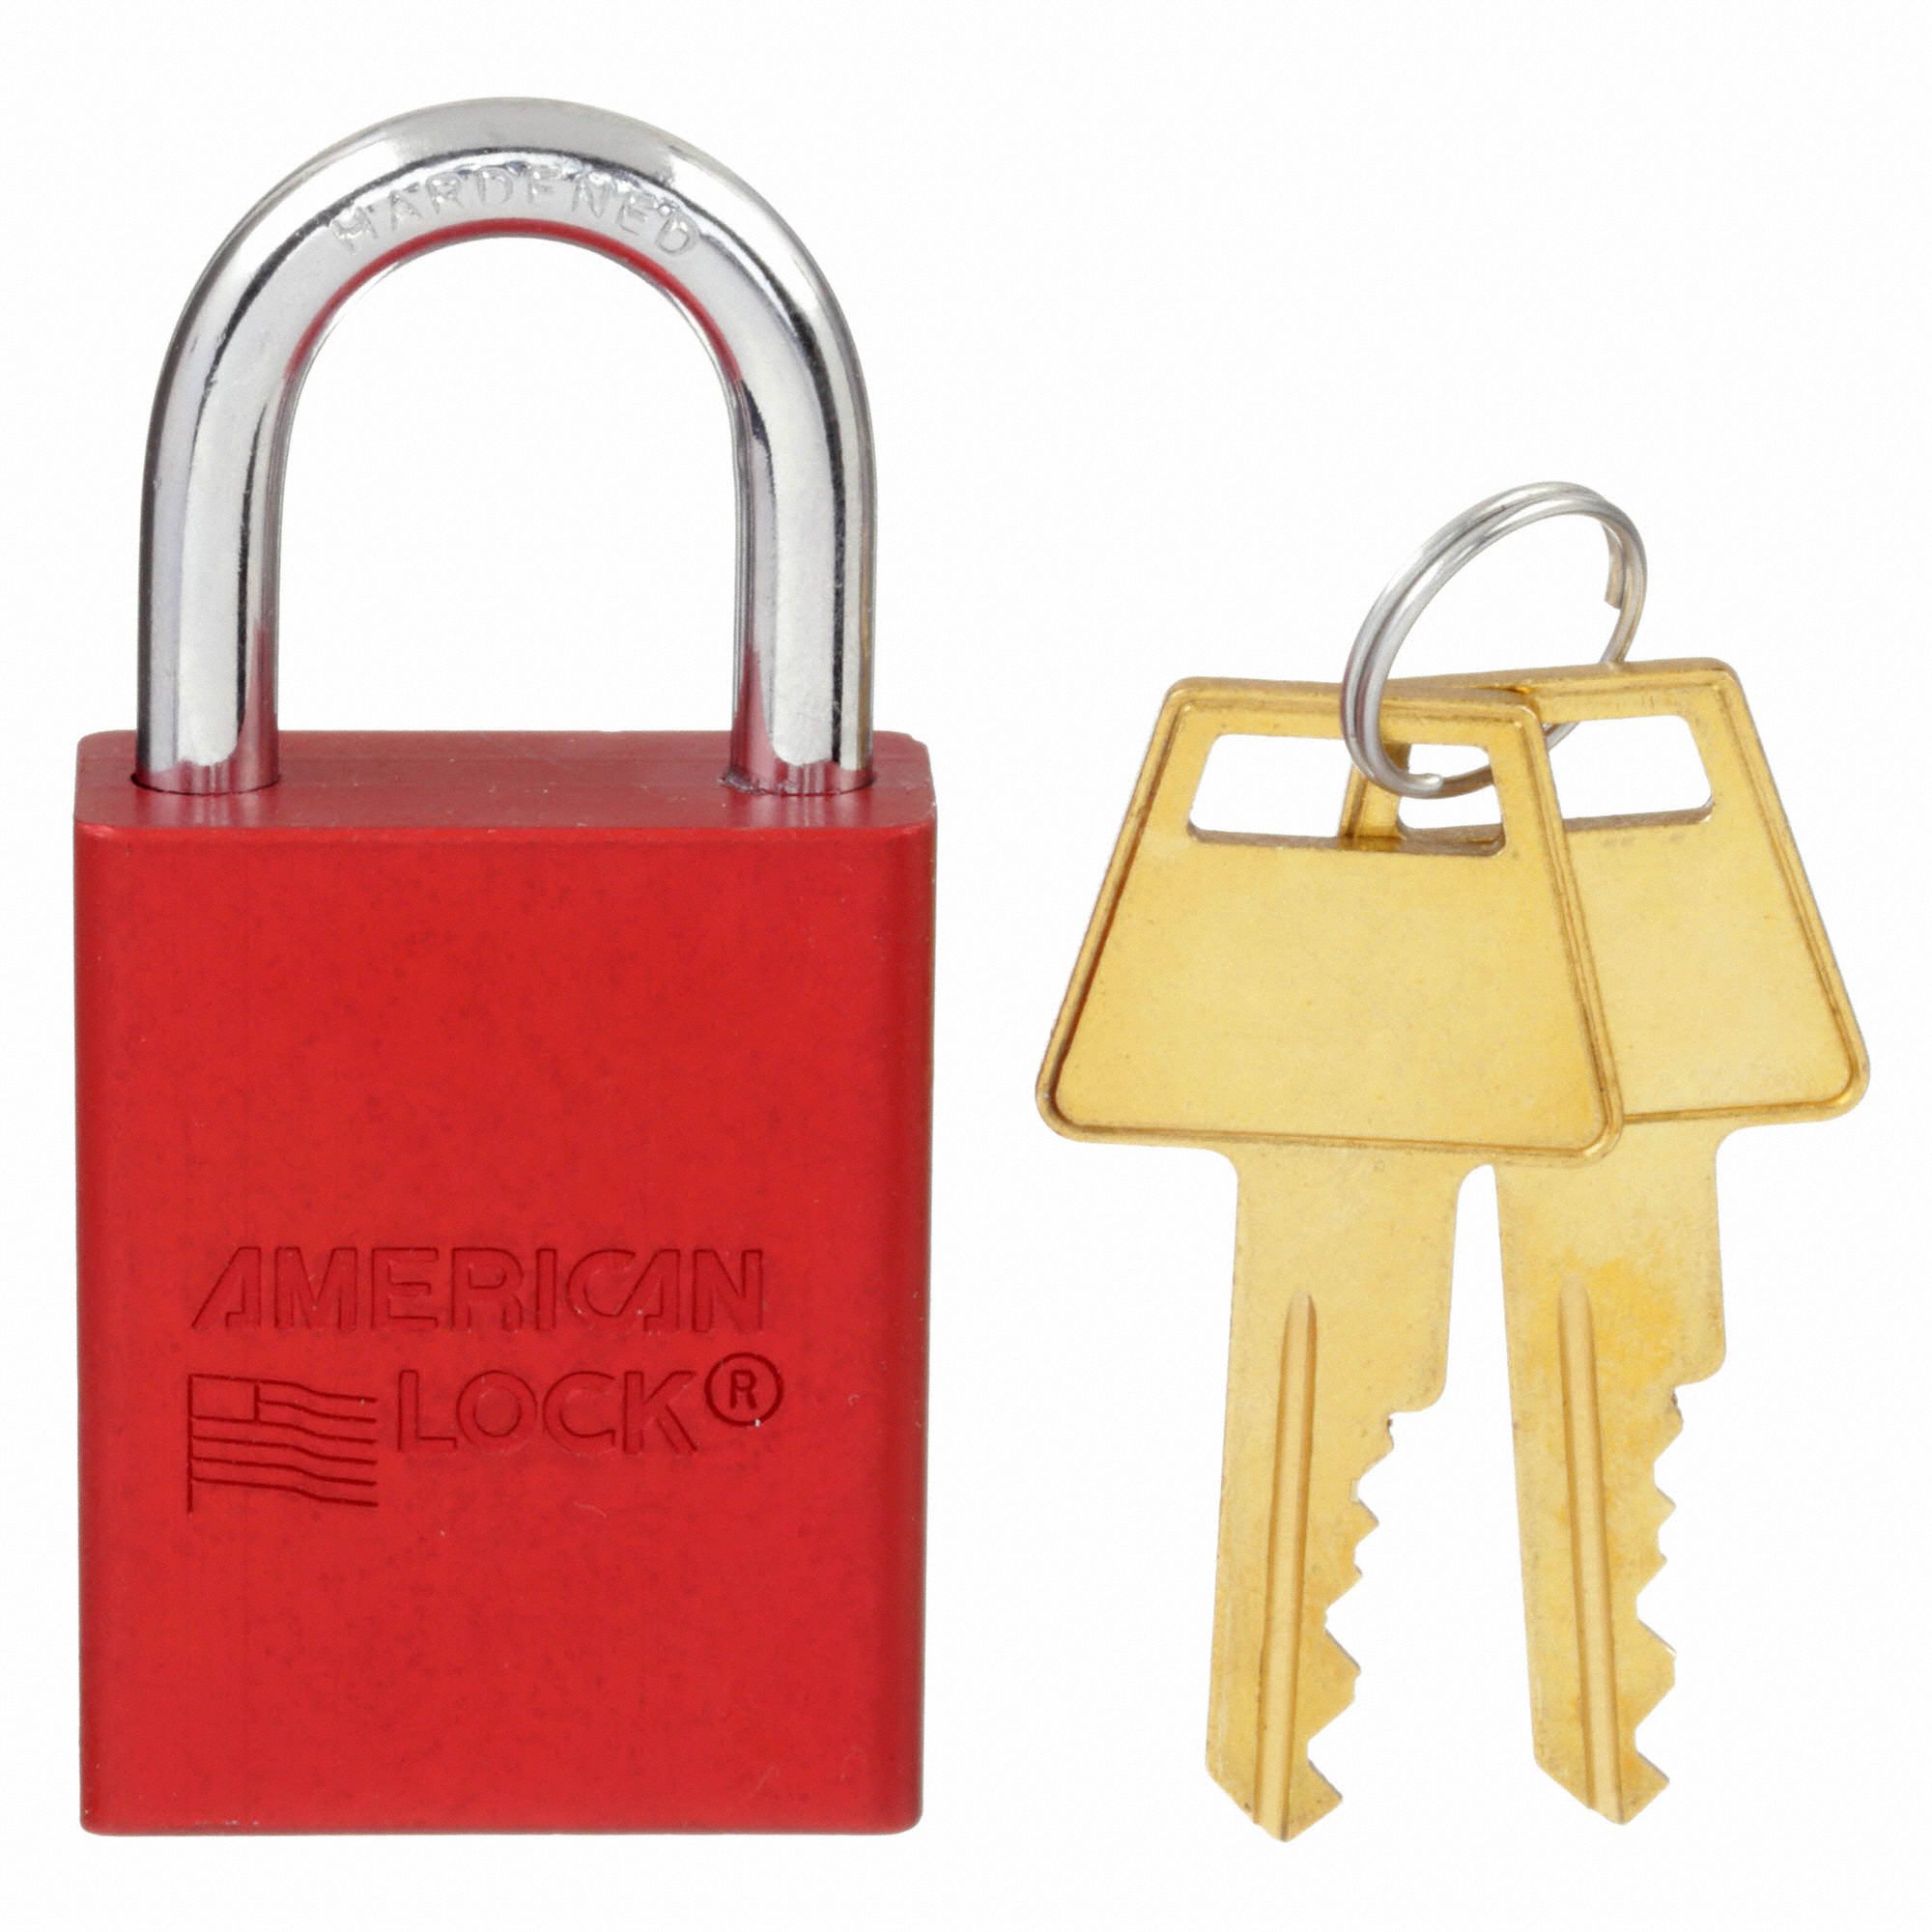 Hercules EK0506 Emergency Key Locking Key Safe Red 4.75-Inch x 6-Inch x 3-Inch Steel Holds 3 Keys 